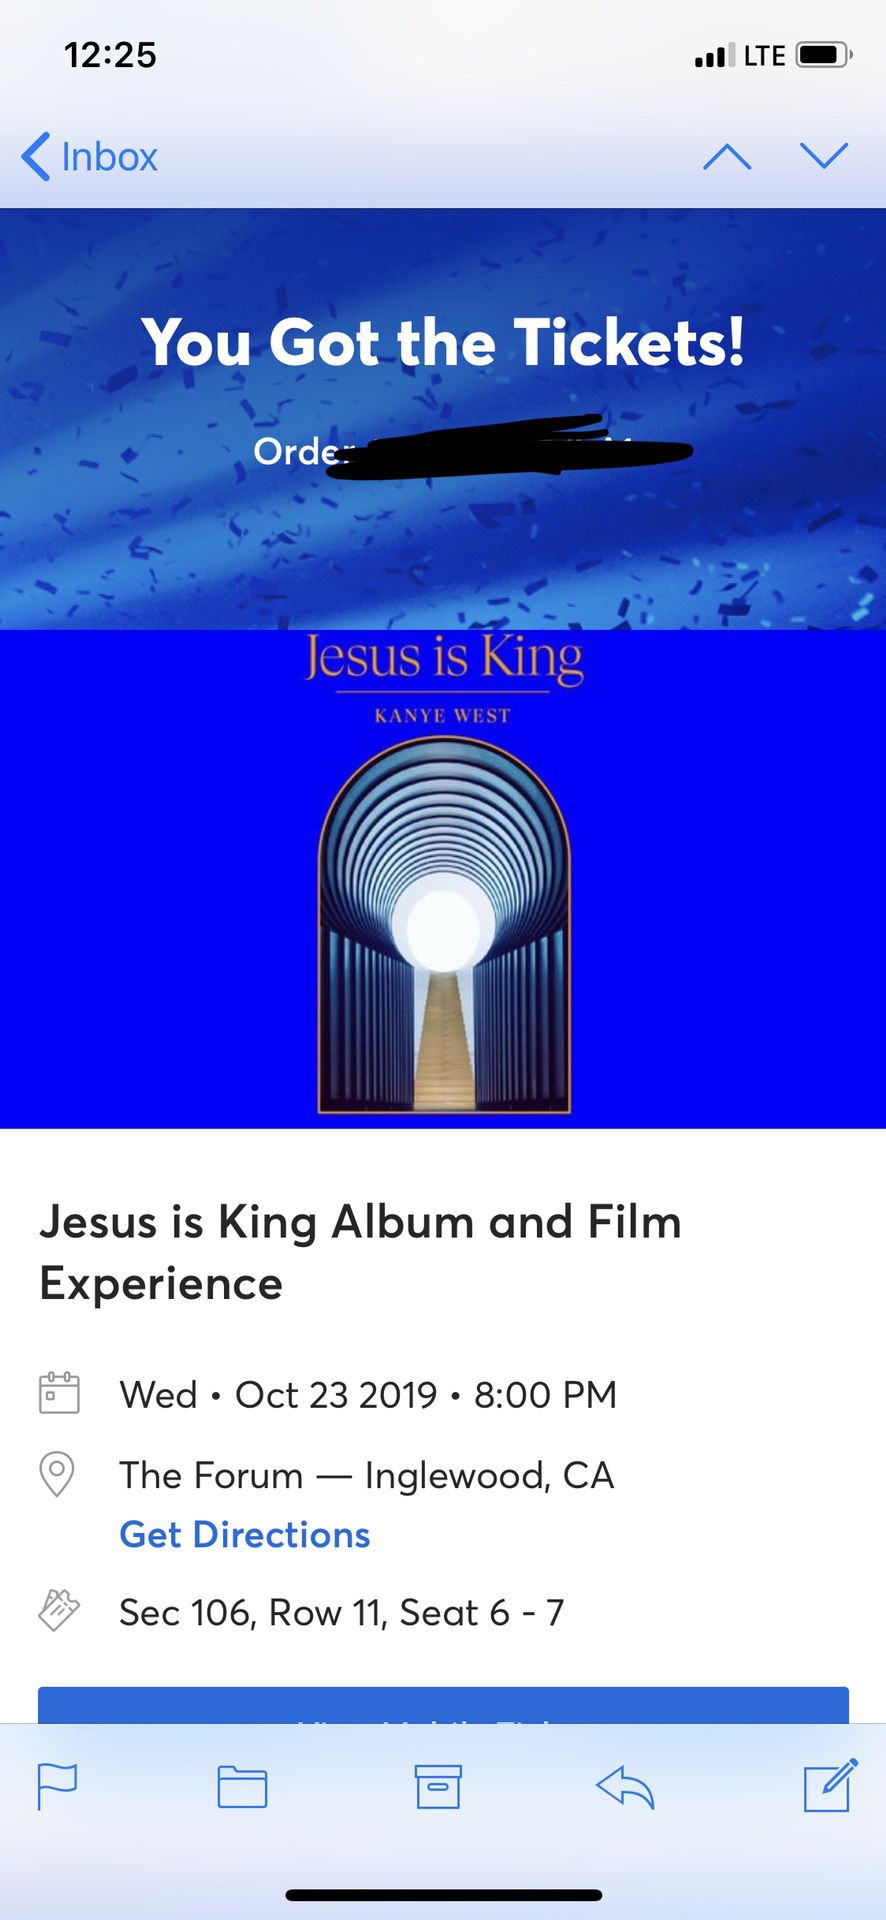 Jesus Is King The Forum Los Angeles 10/23 SEC 106, ROW 11 Seat 6 & 7